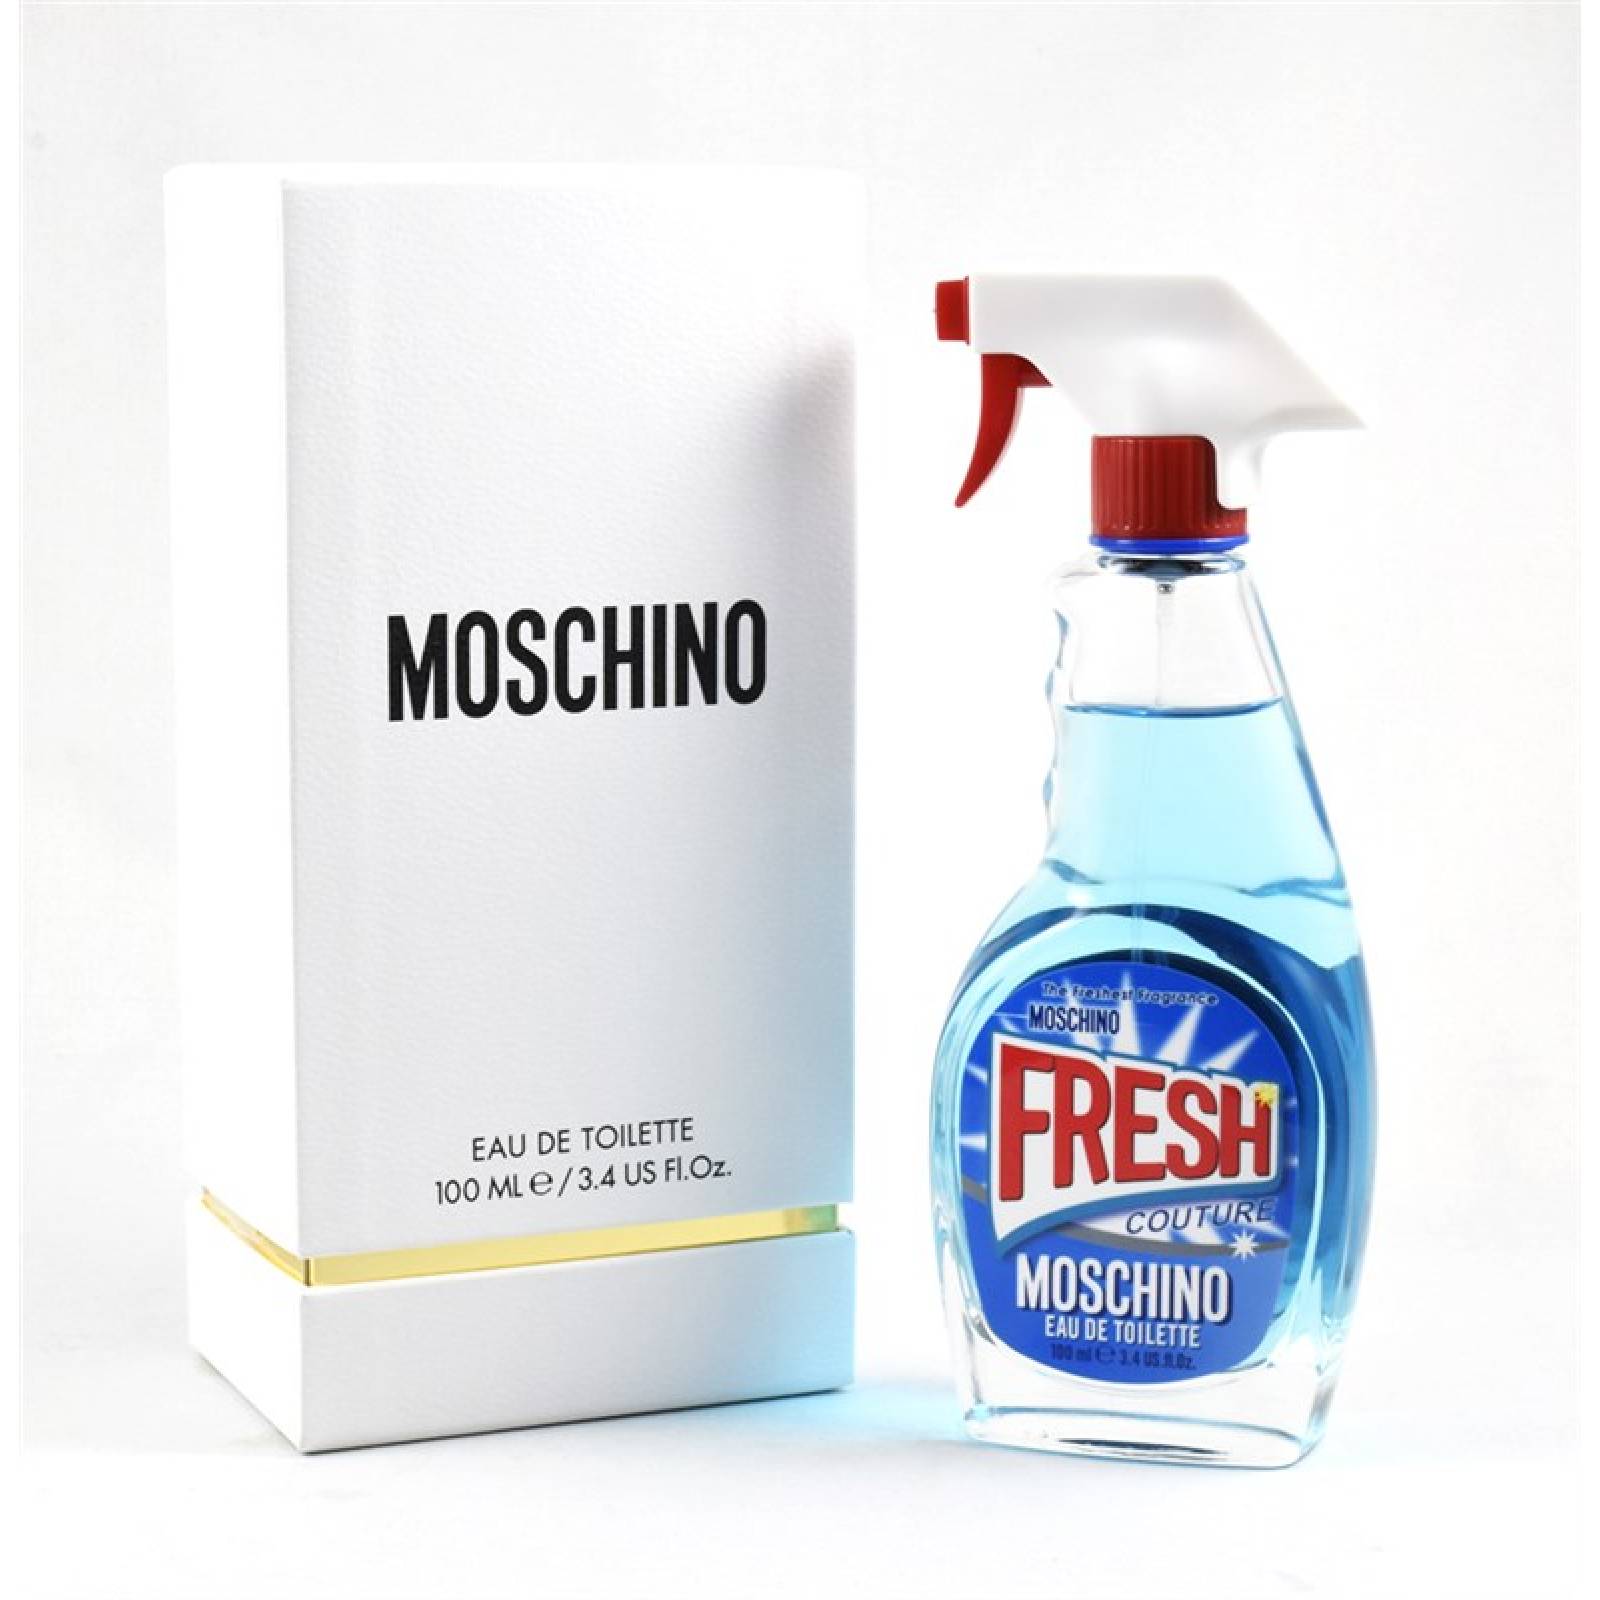 Moschino Fresh Couture 100 ml Eau de Toilette de Moschino Fragancia para Dama